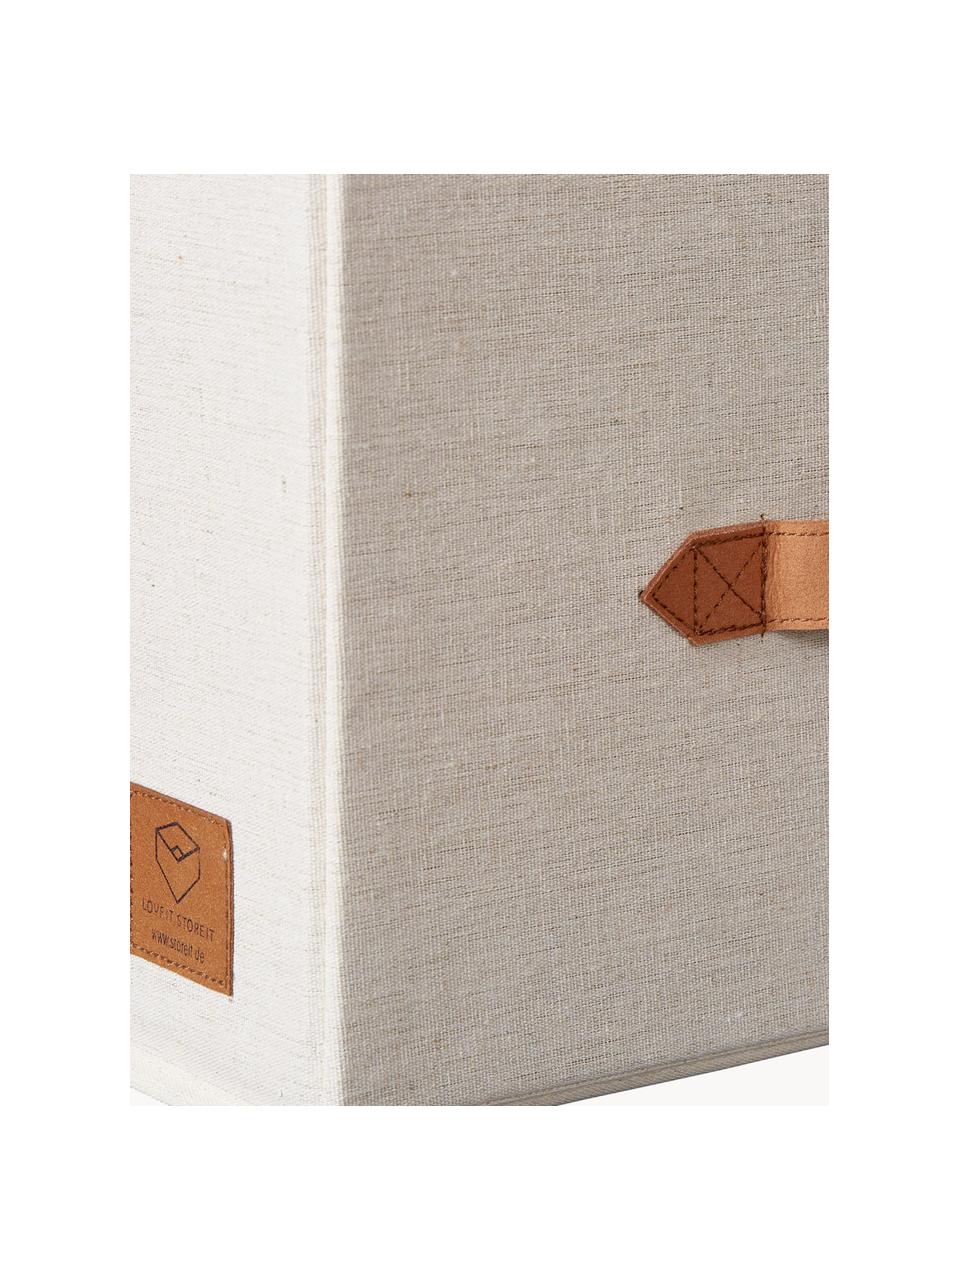 Boîte de rangement Premium, Beige clair, brun, larg. 33 x prof. 50 cm